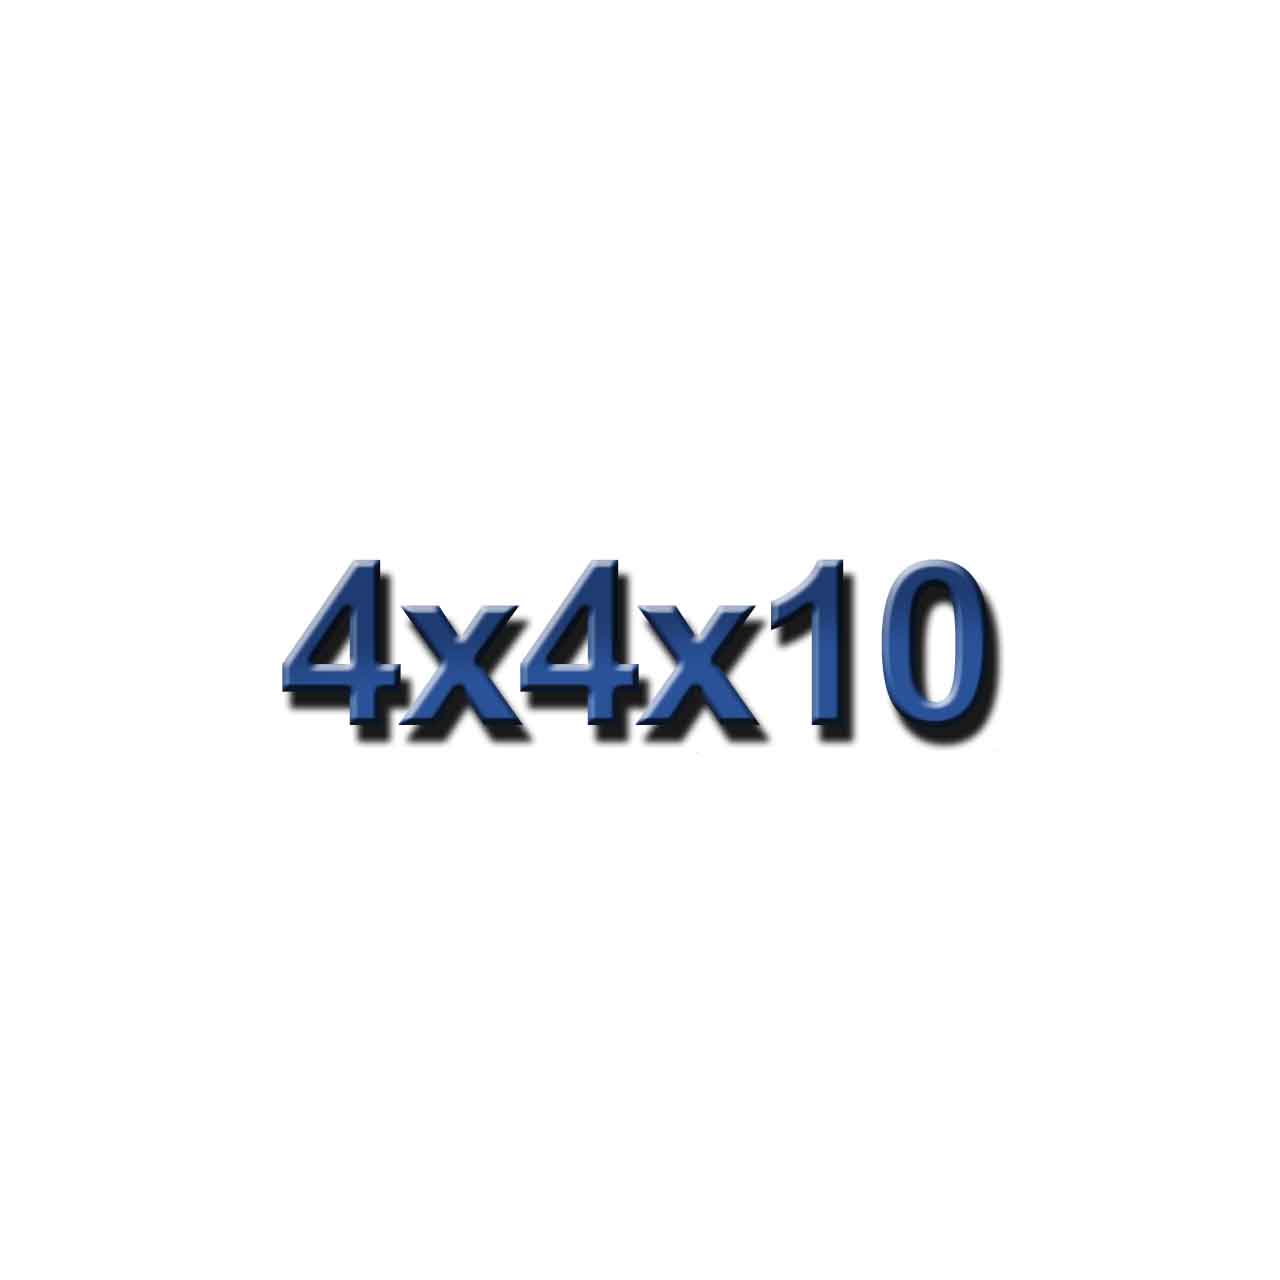 4x4x10